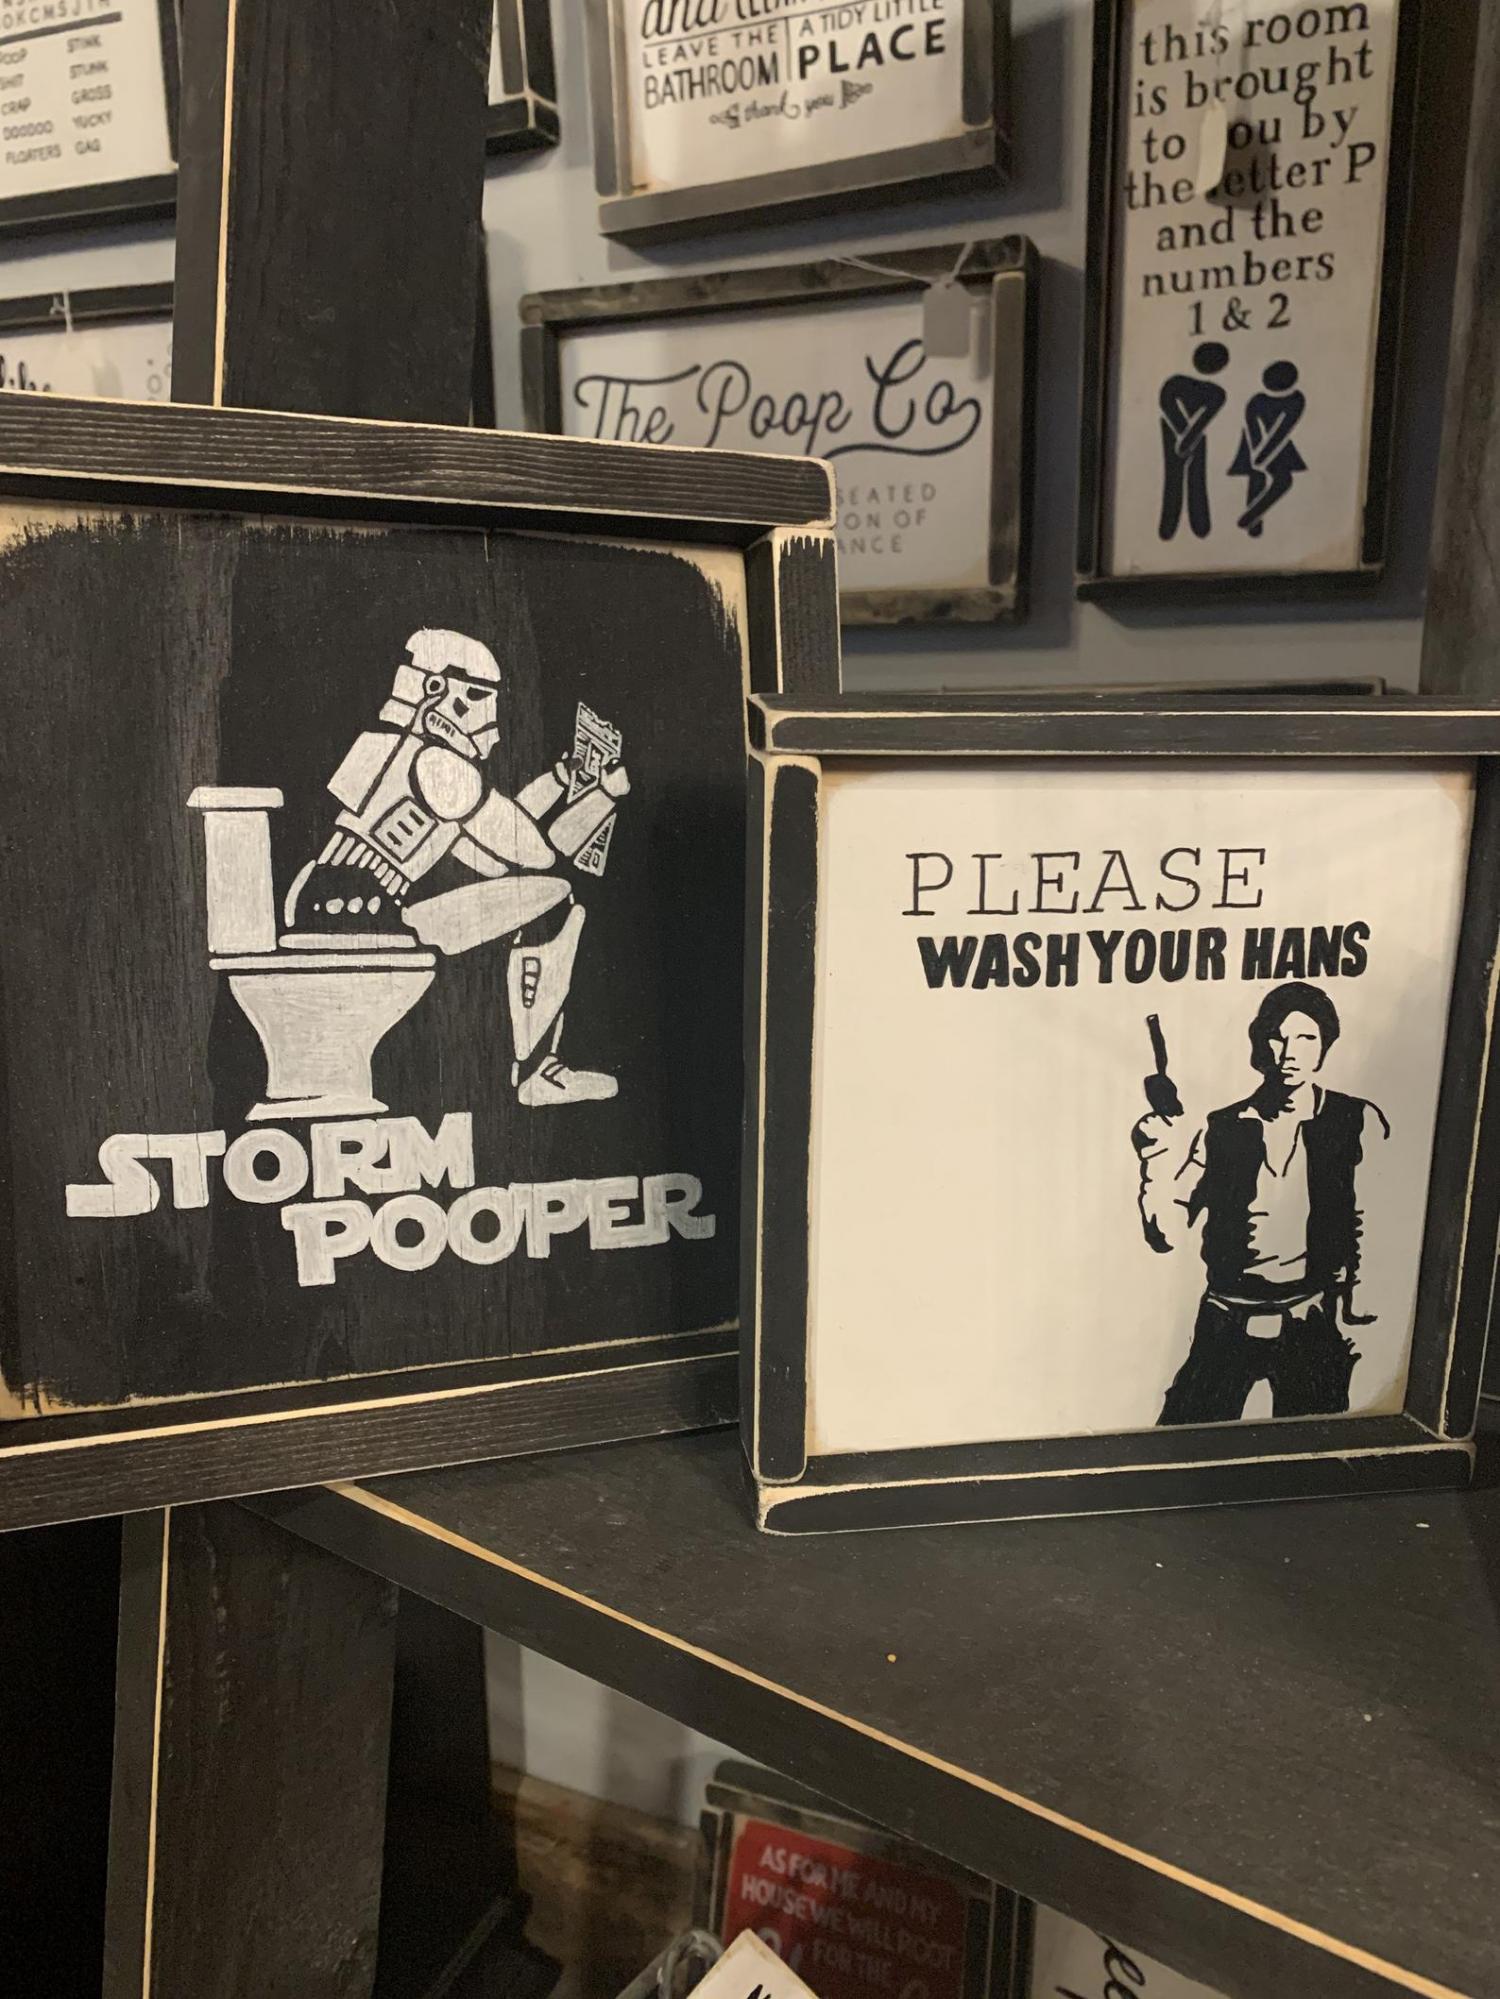 Storm Pooper Star Wars Toilet Bathroom Sign - Funny Star Wars Bathroom Sign